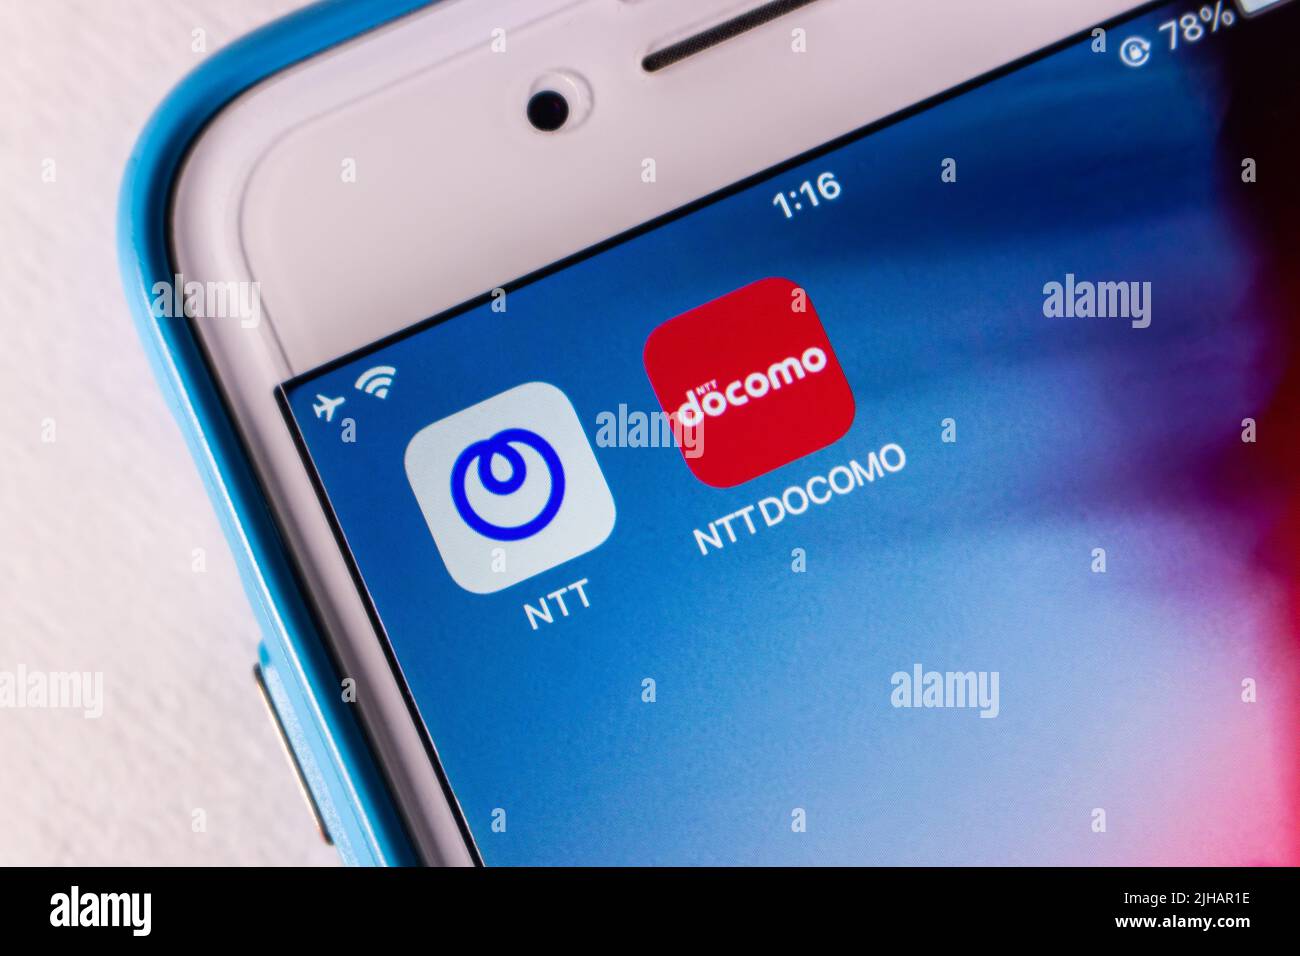 Kumamoto, JAPAN - Jul 14 2022 : A Japanese telecommunications company NTT and a Japanese mobile phone operator NTT Docomo icons on an iPhone screen. Stock Photo